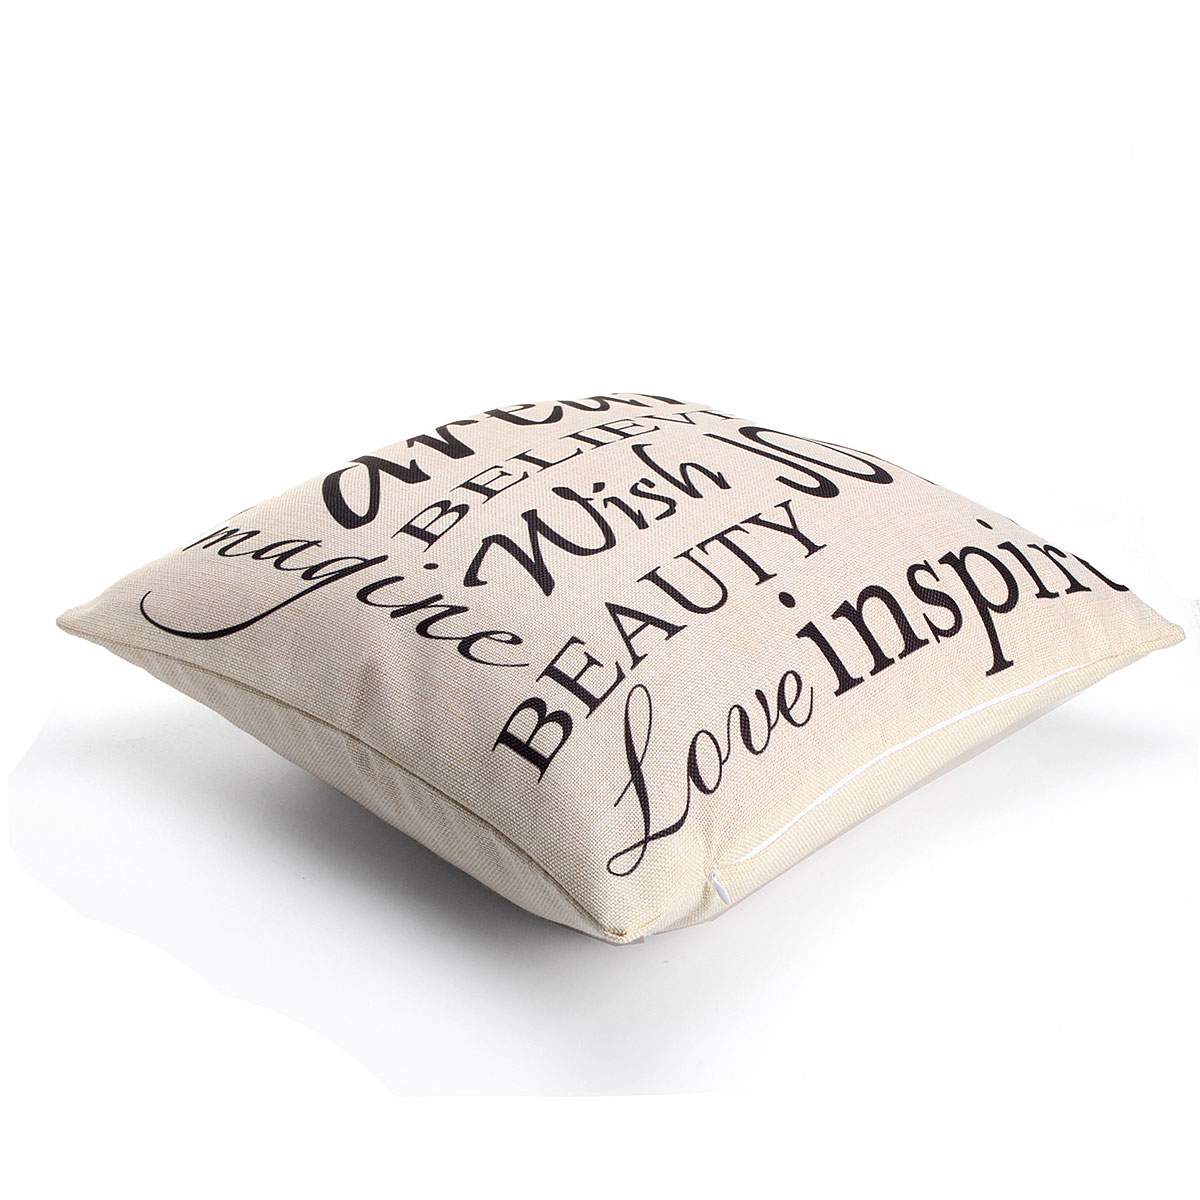 Square-English-Letter-Cotton-Linen-Pillow-Case-Throw-Cushion-Cover-Home-Decor-1053093-7